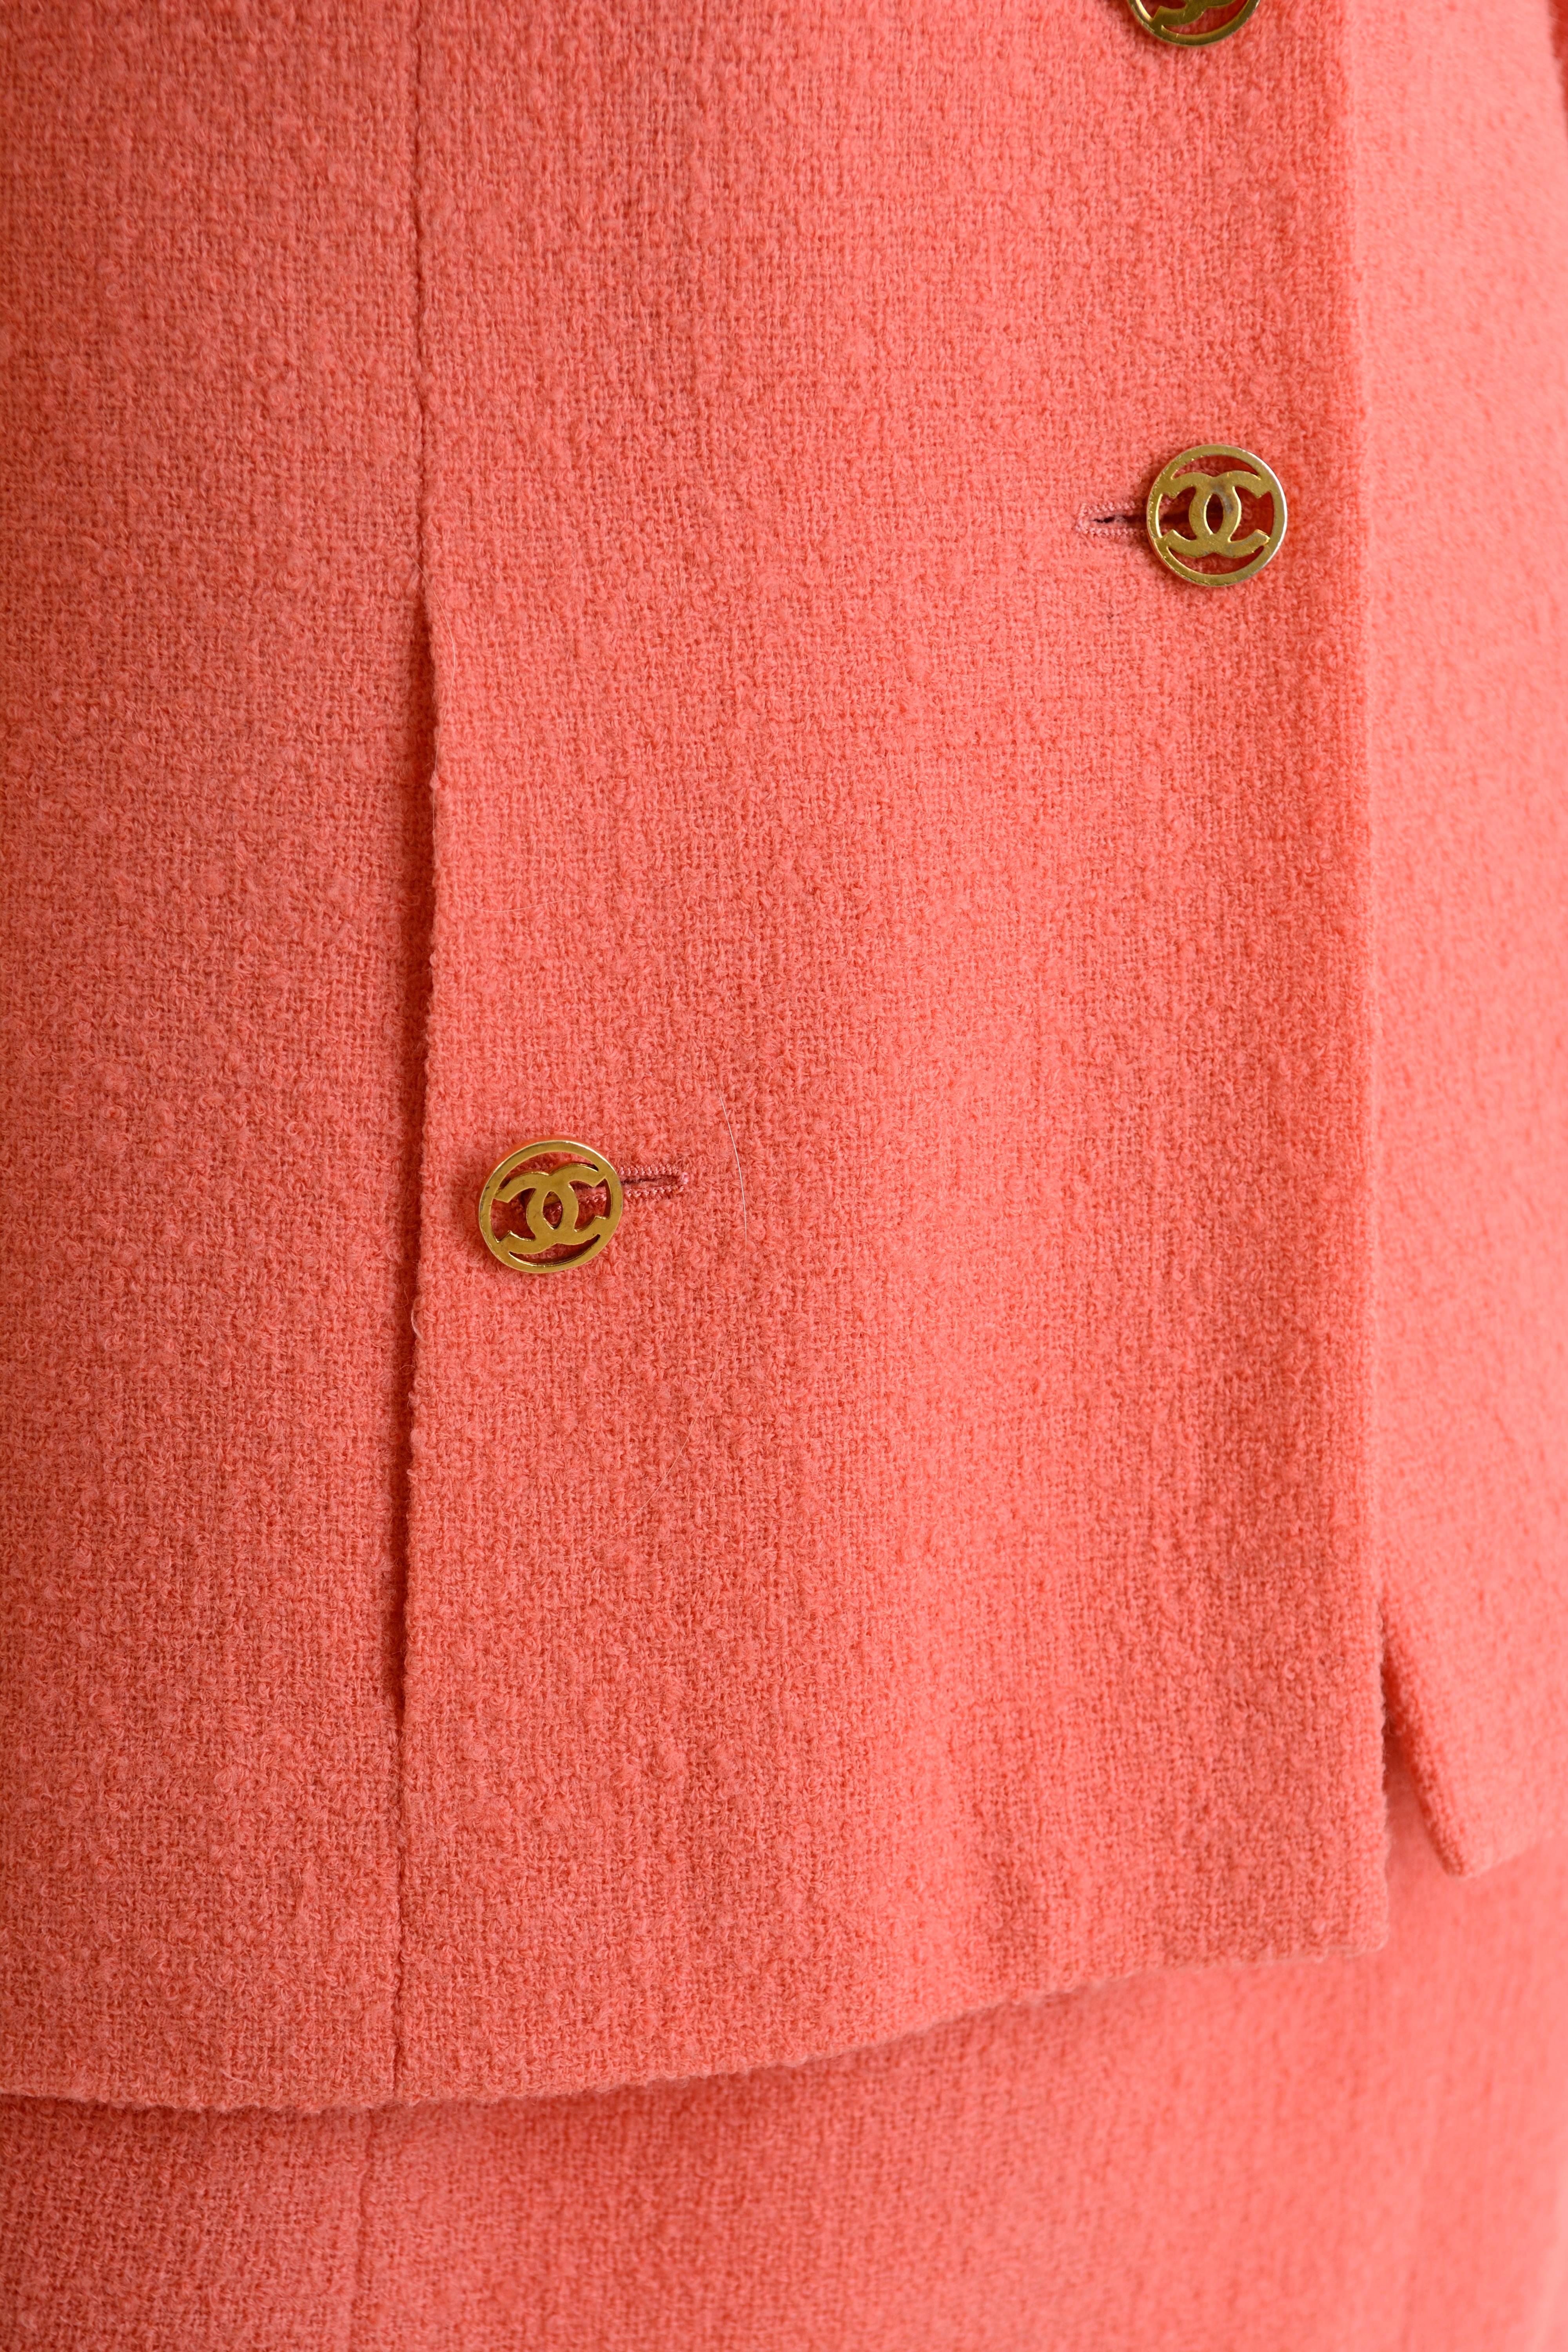 1990s CHANEL Coral Pink Boucle Suit Dress 1